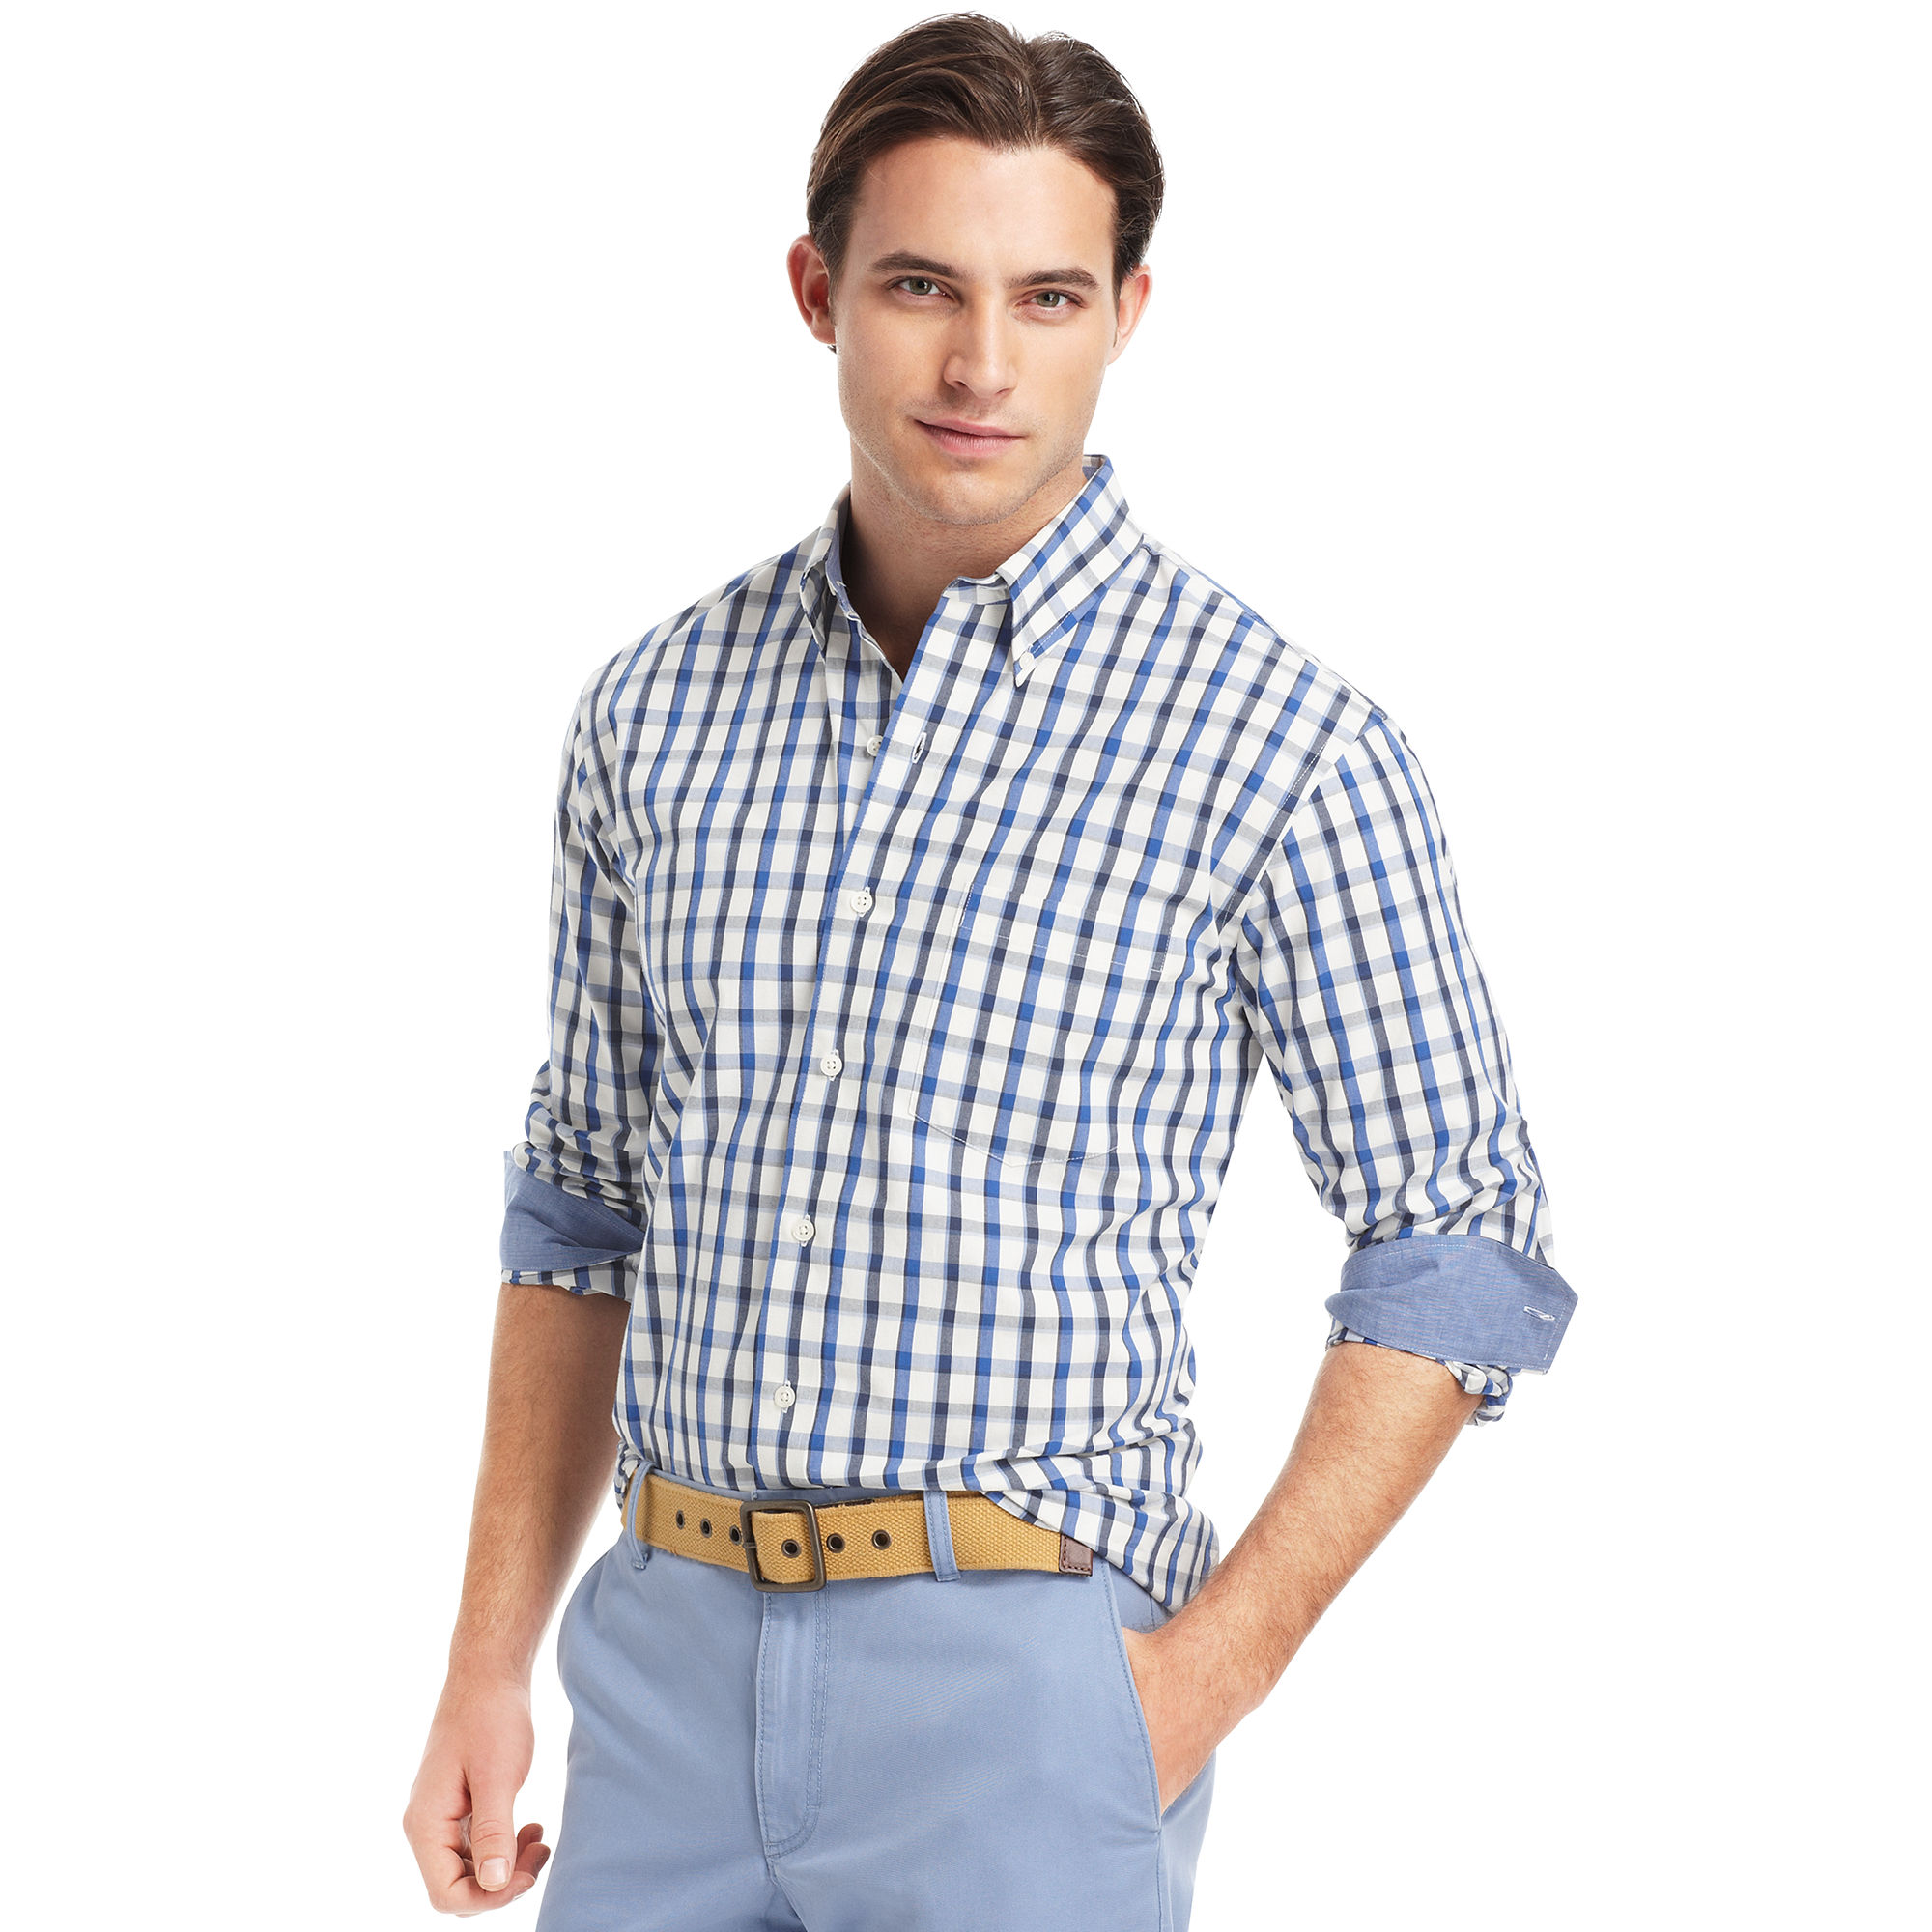 Lyst - Izod Izod Shirt Long Sleeve White Ground Plaid Shirt in Blue for Men